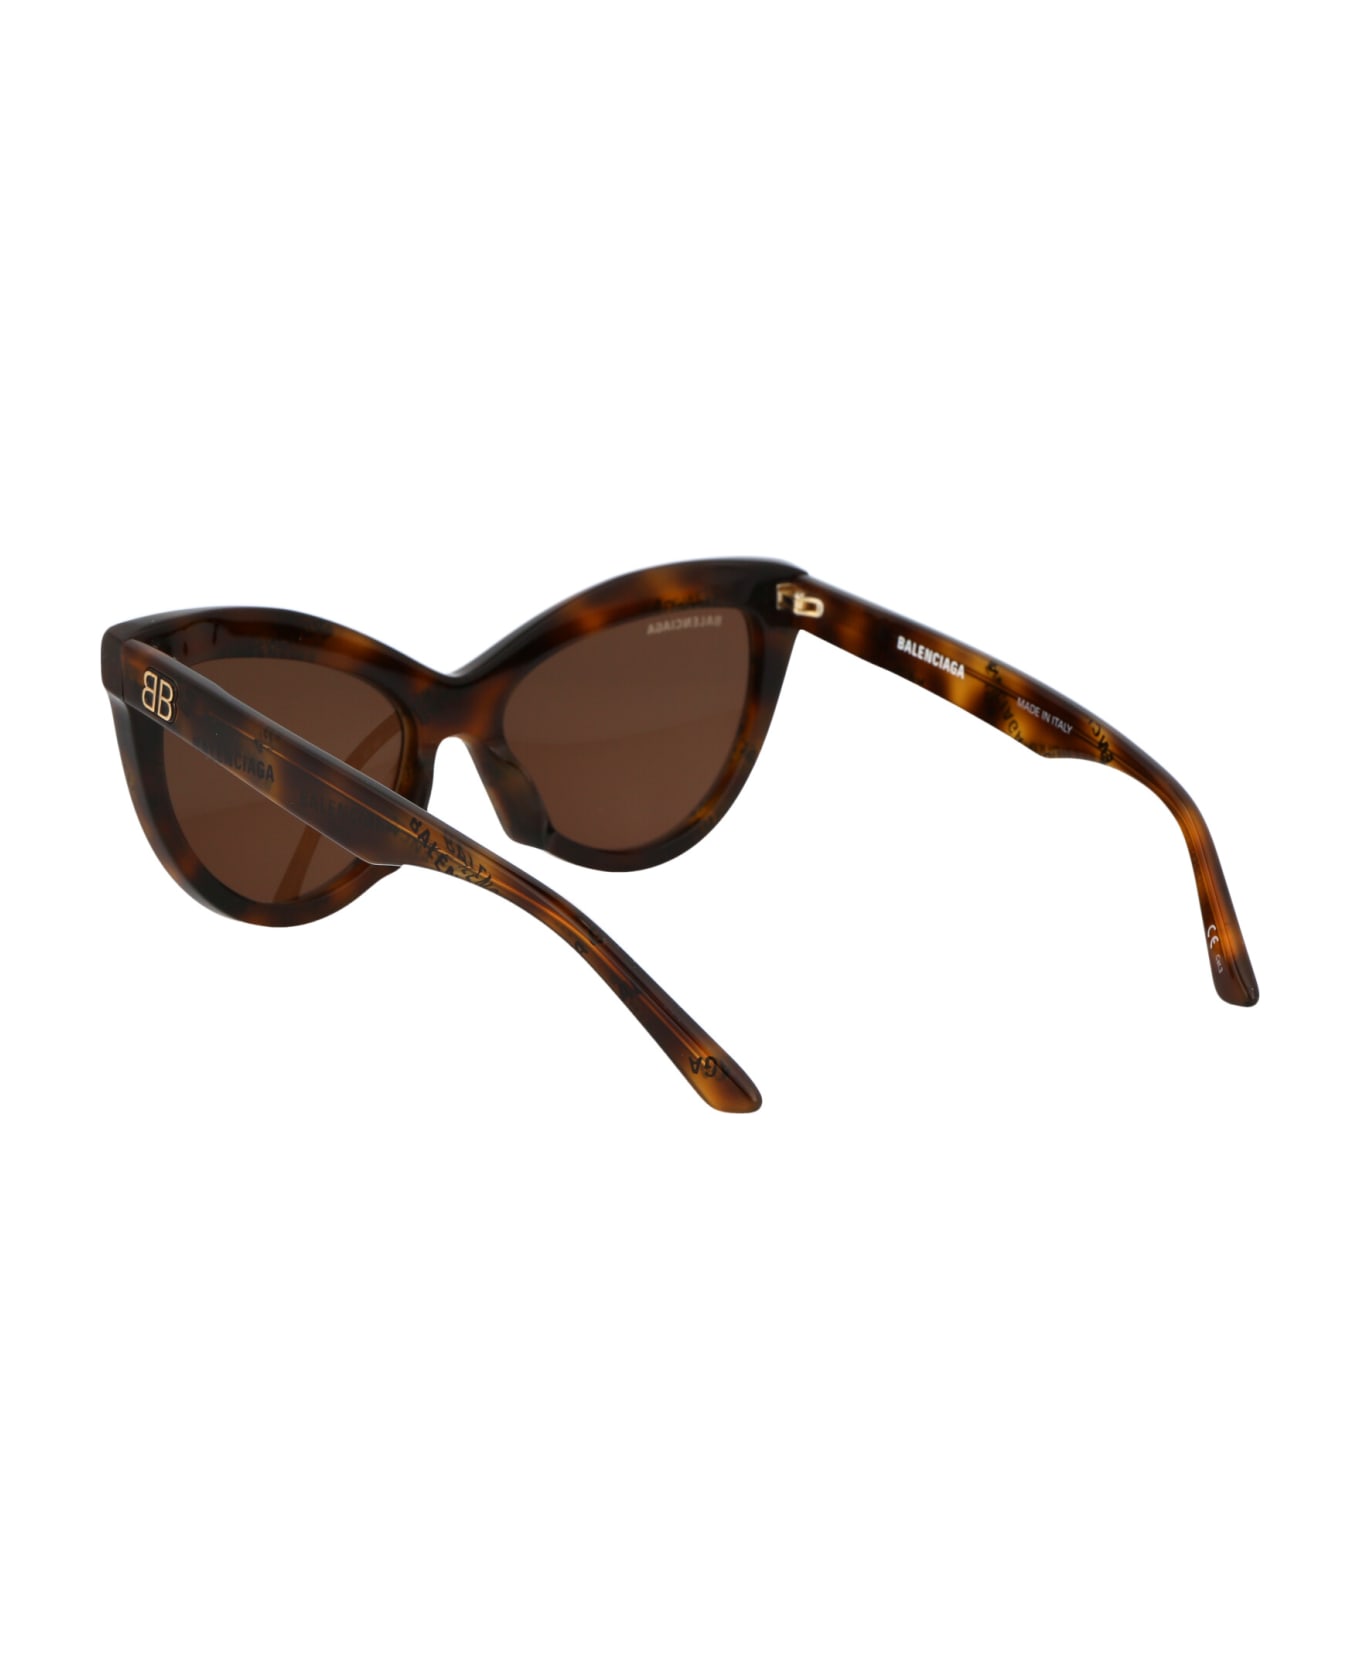 Balenciaga Eyewear Bb0217s Sunglasses - 002 celine eyewear rectangular acetate sunglasses